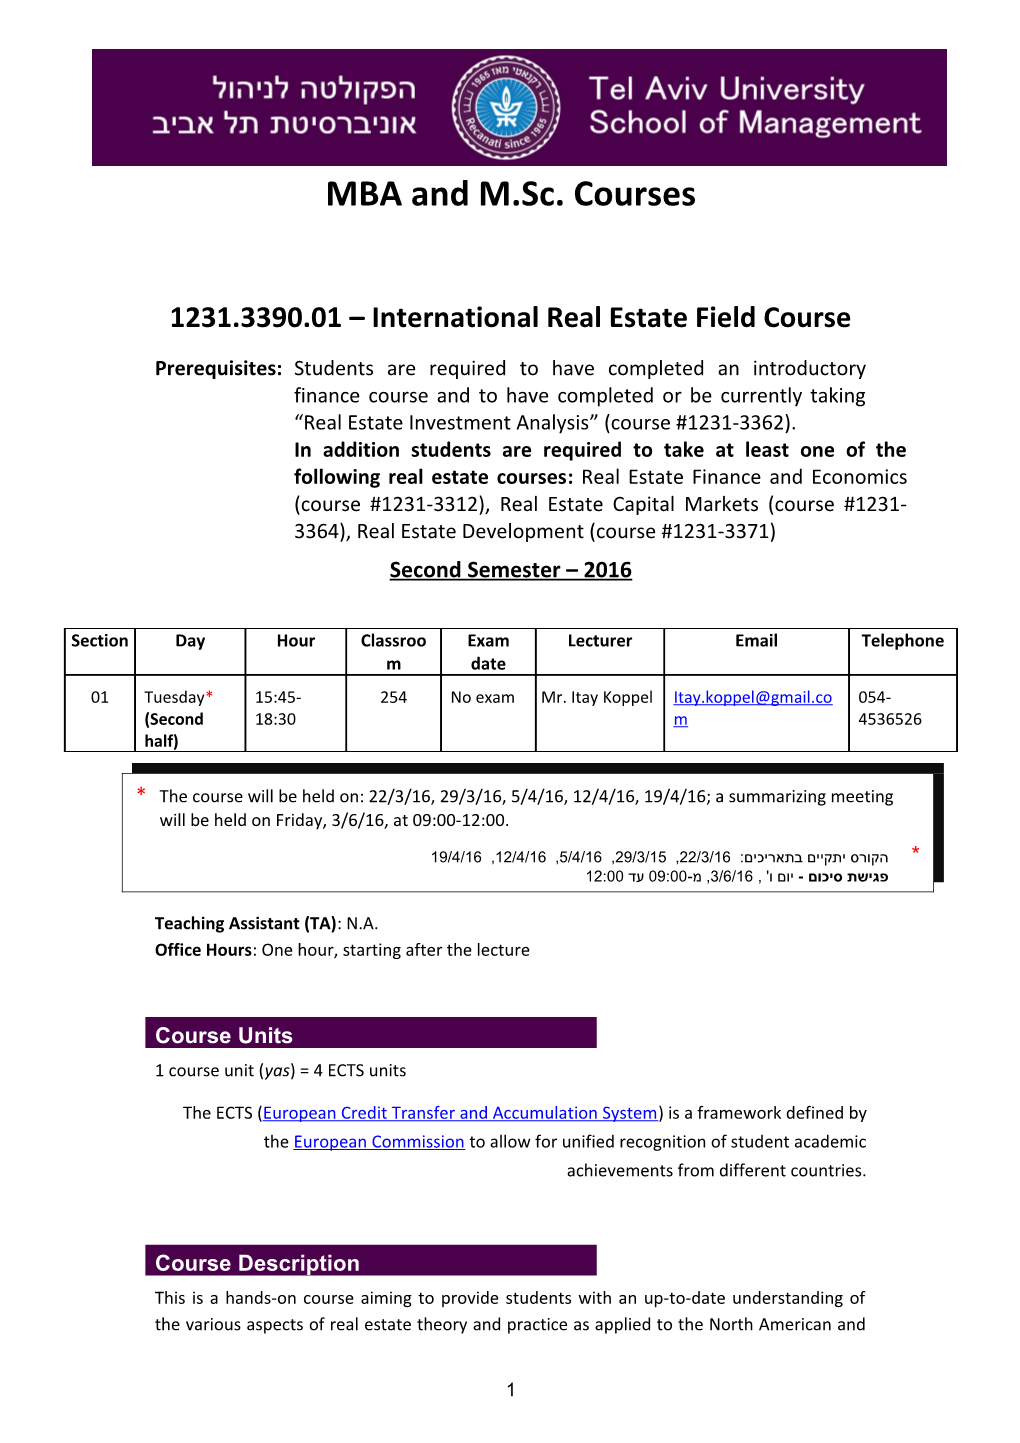 1231.3390.01 International Real Estate Field Course